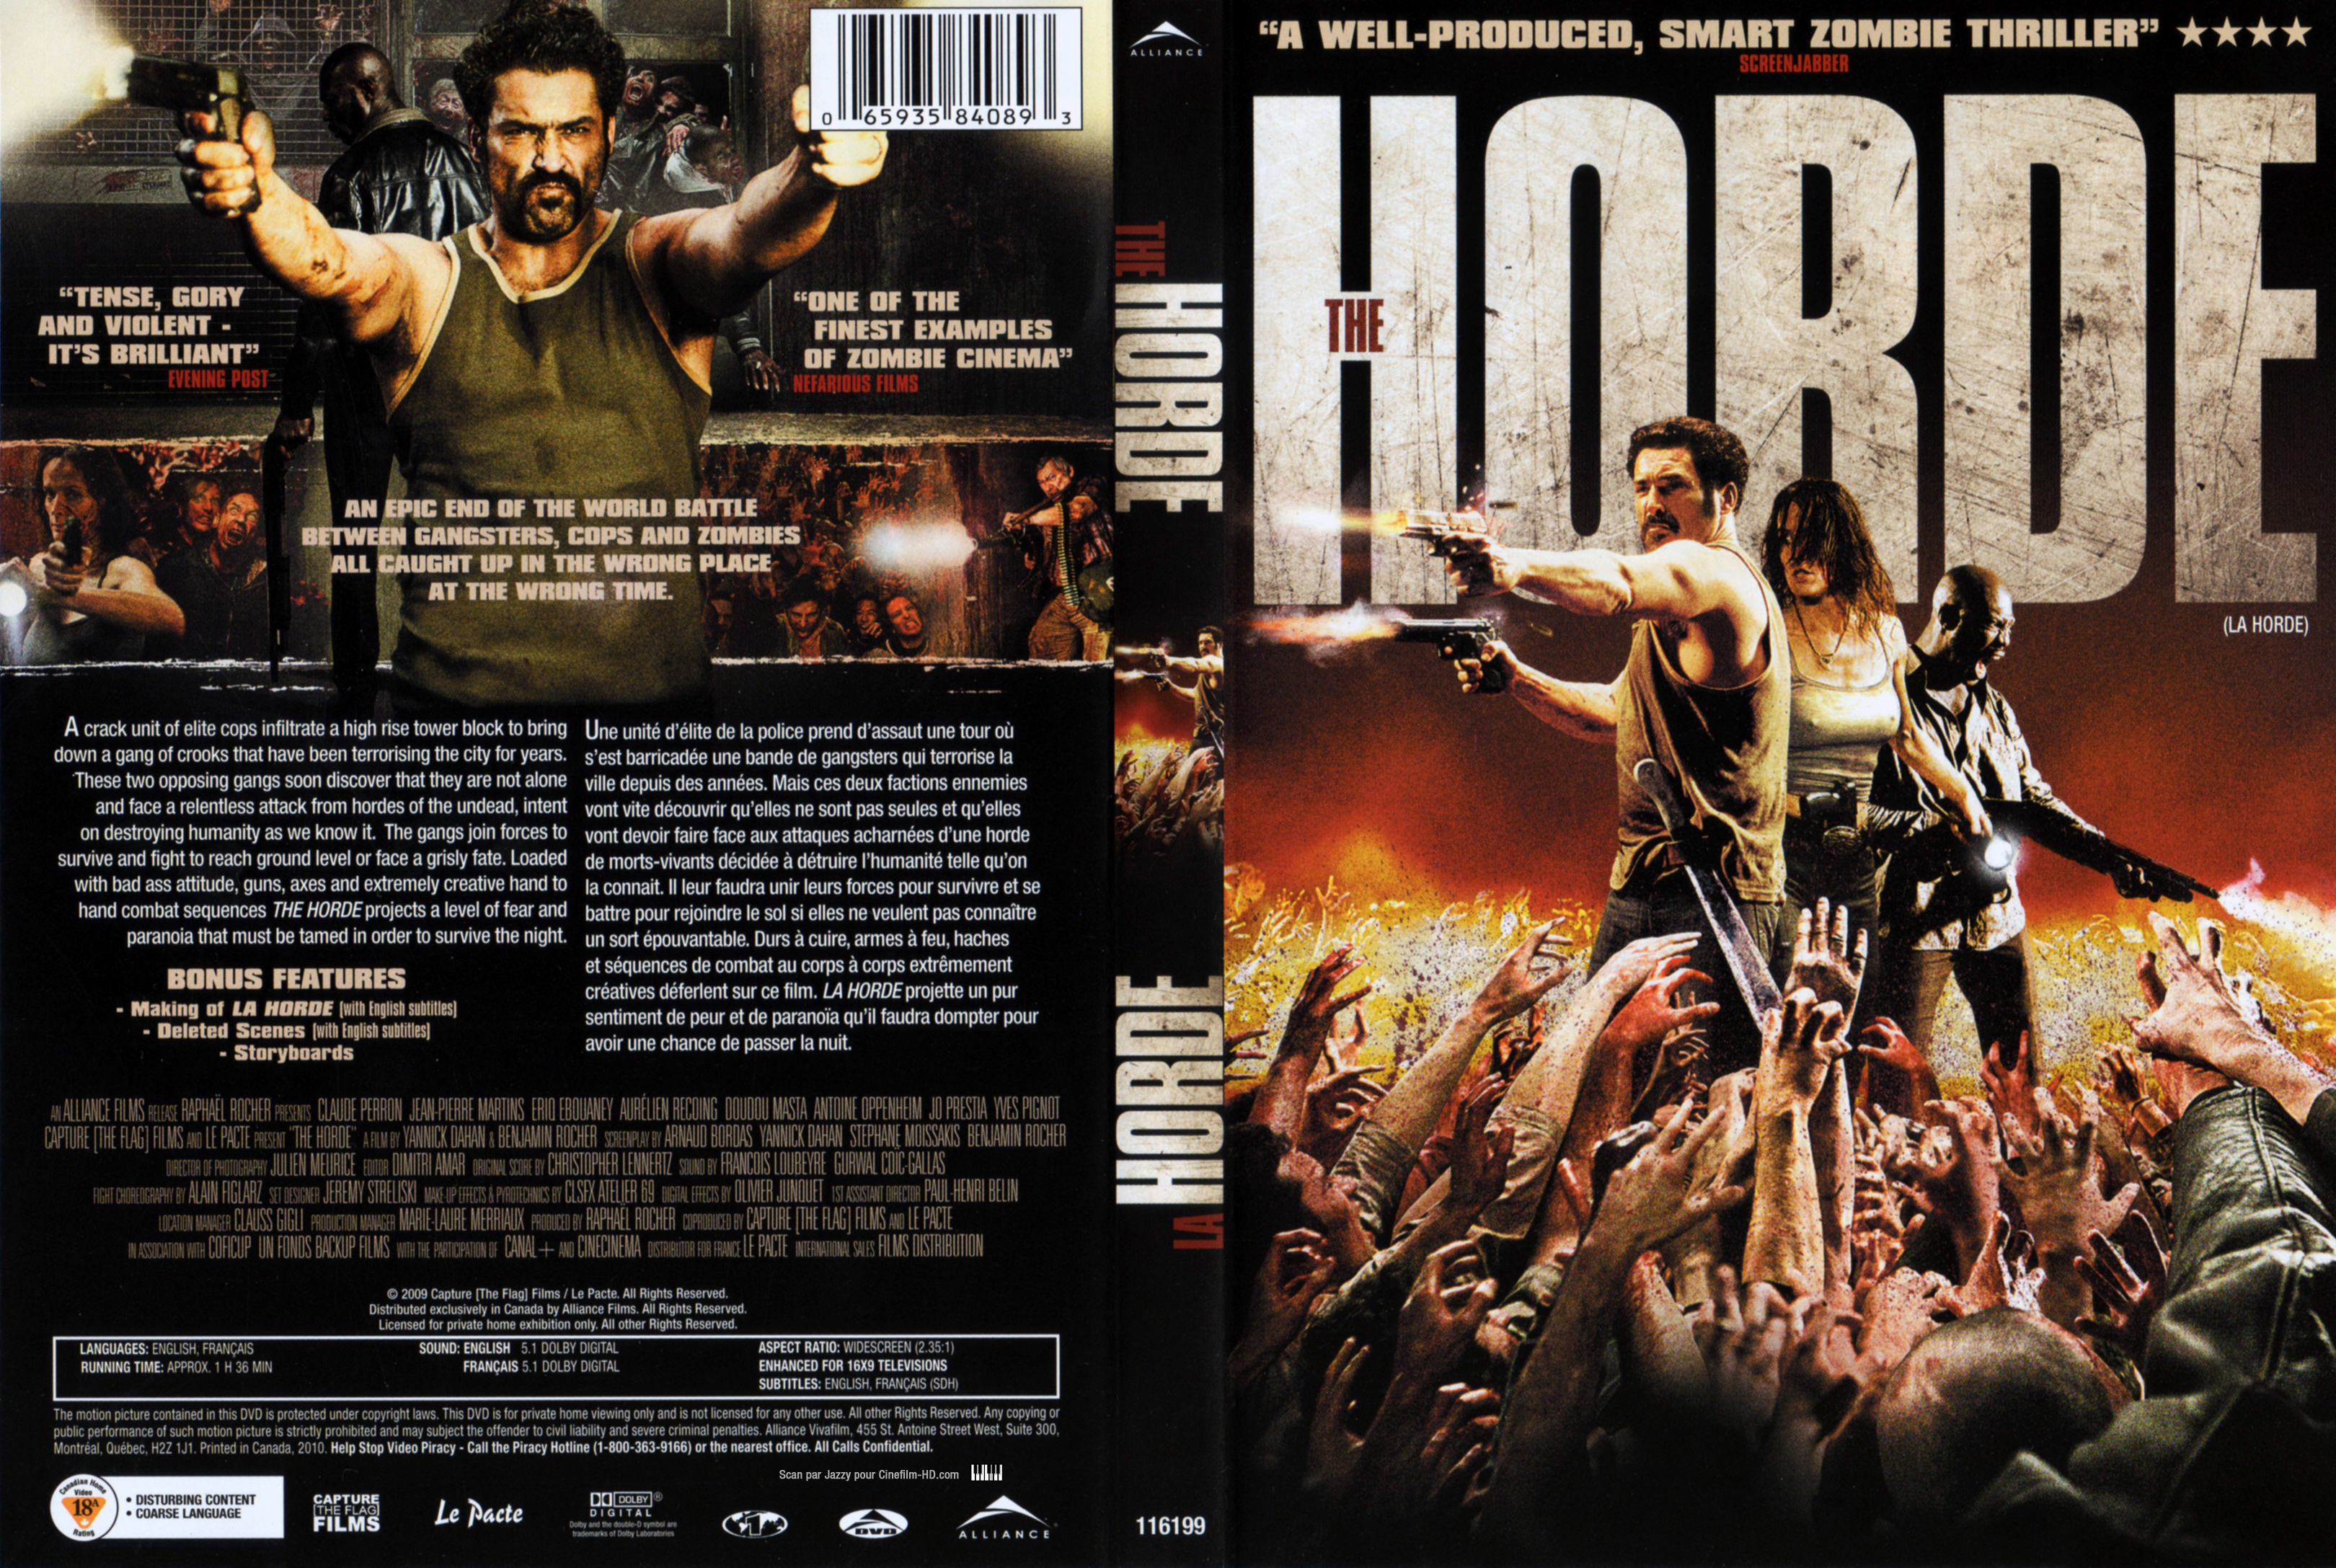 Jaquette DVD The horde - La horde (Canadienne)